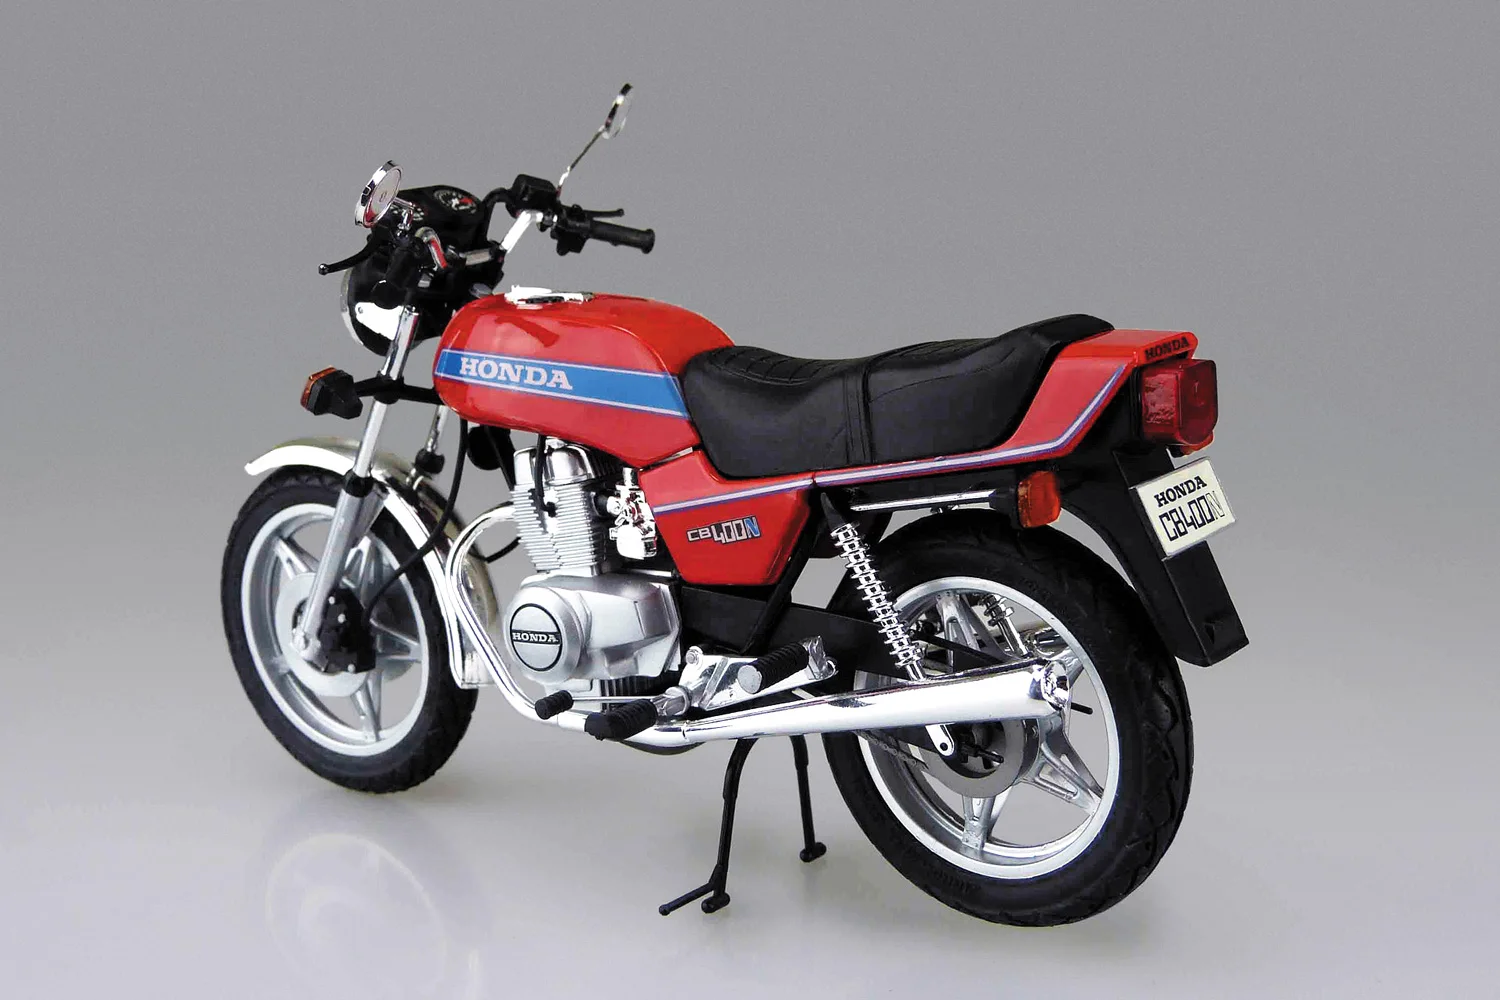 1/12 мотоцикл Honda ястреб III CB400N 1978 05394